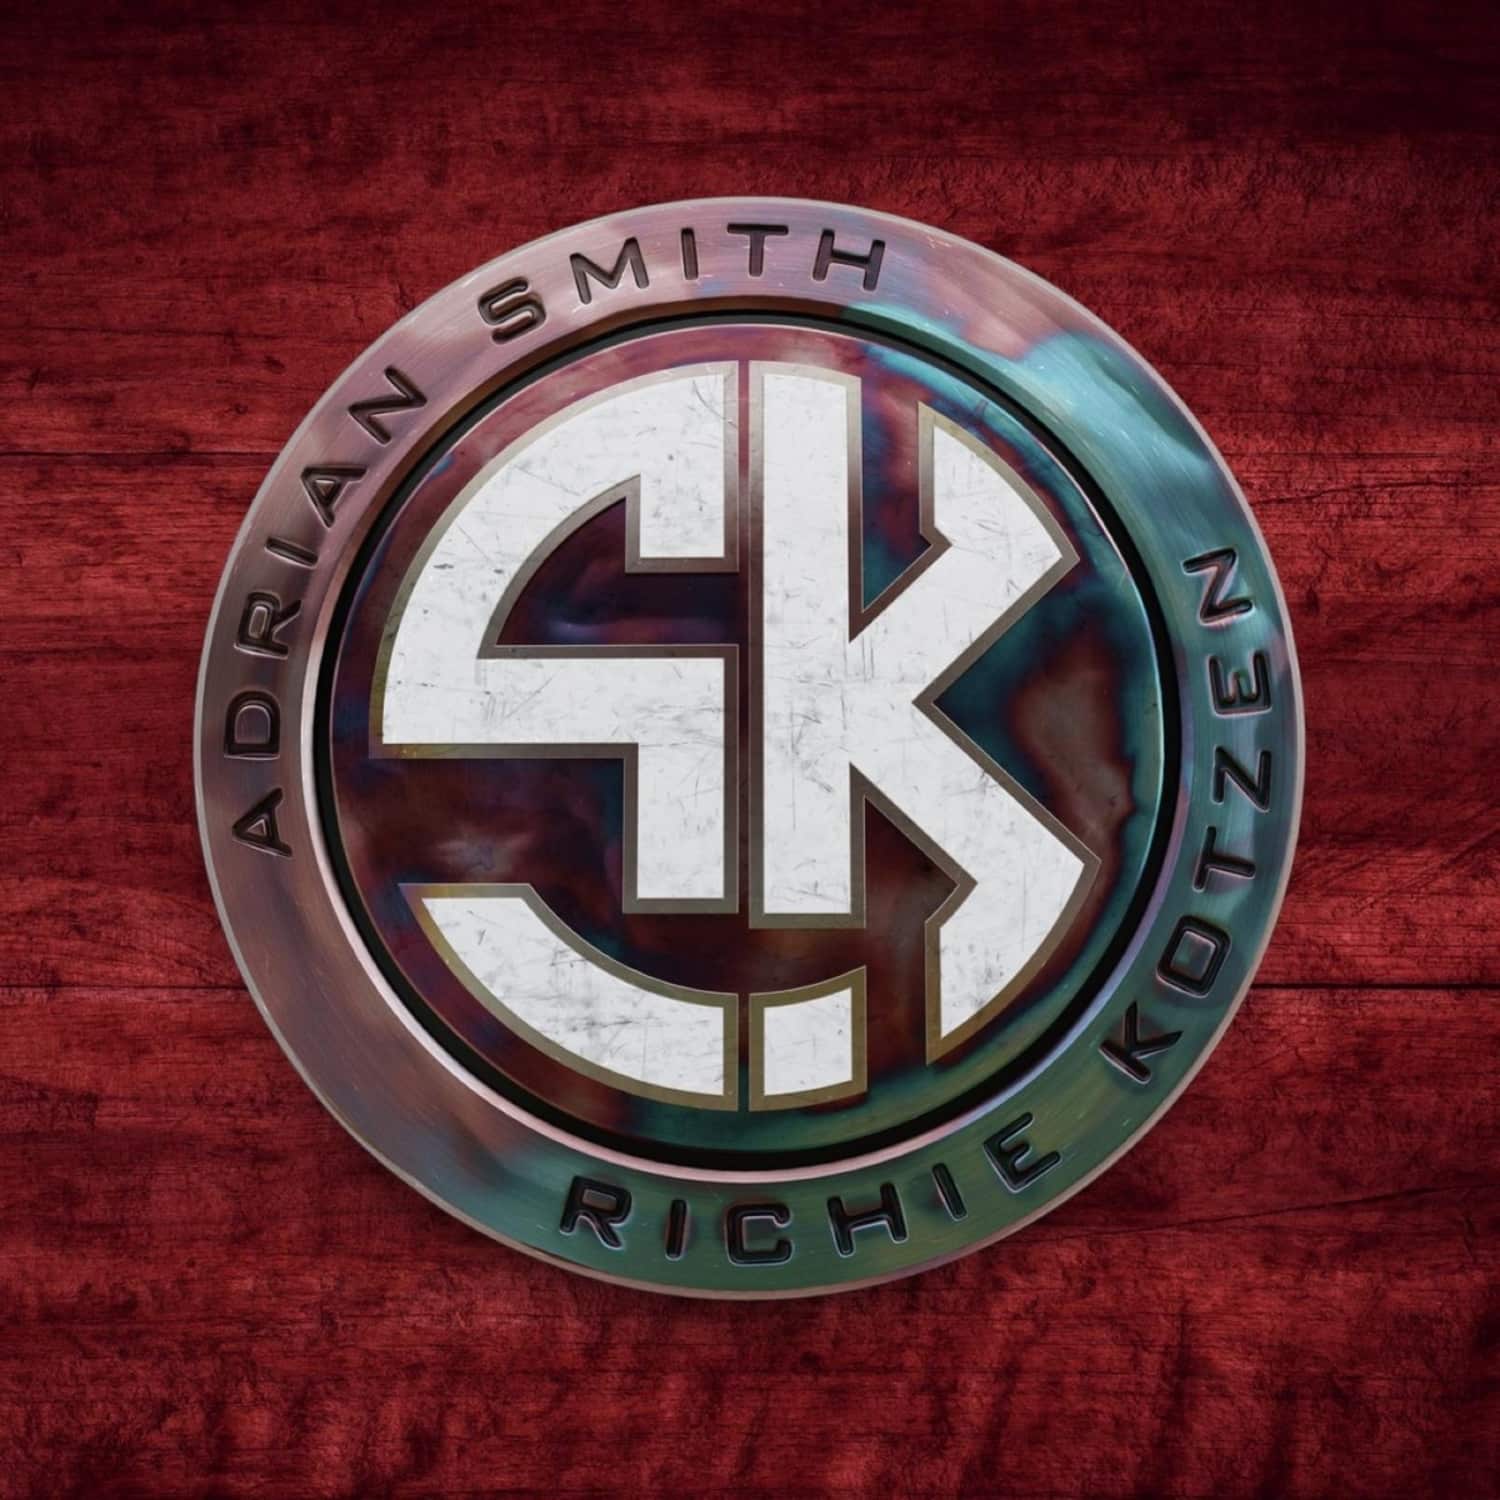 Smith / Kotzen, Adrian Smith, Richie Kotzen - SMITH / KOTZEN 